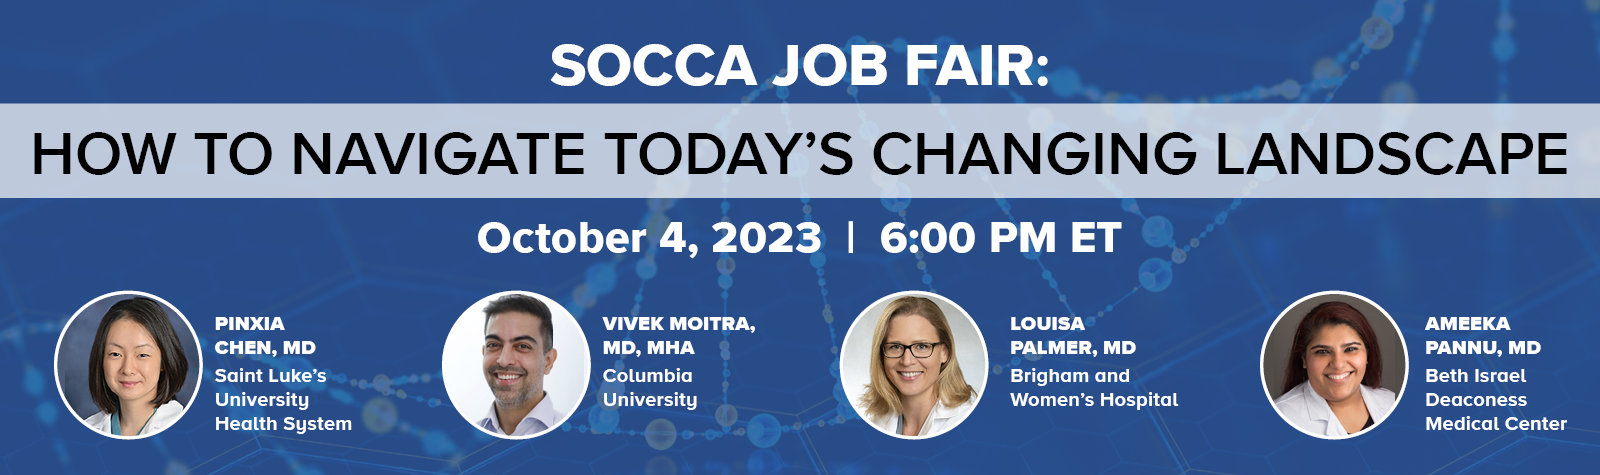 SOCCA October 4 Job Fair Image